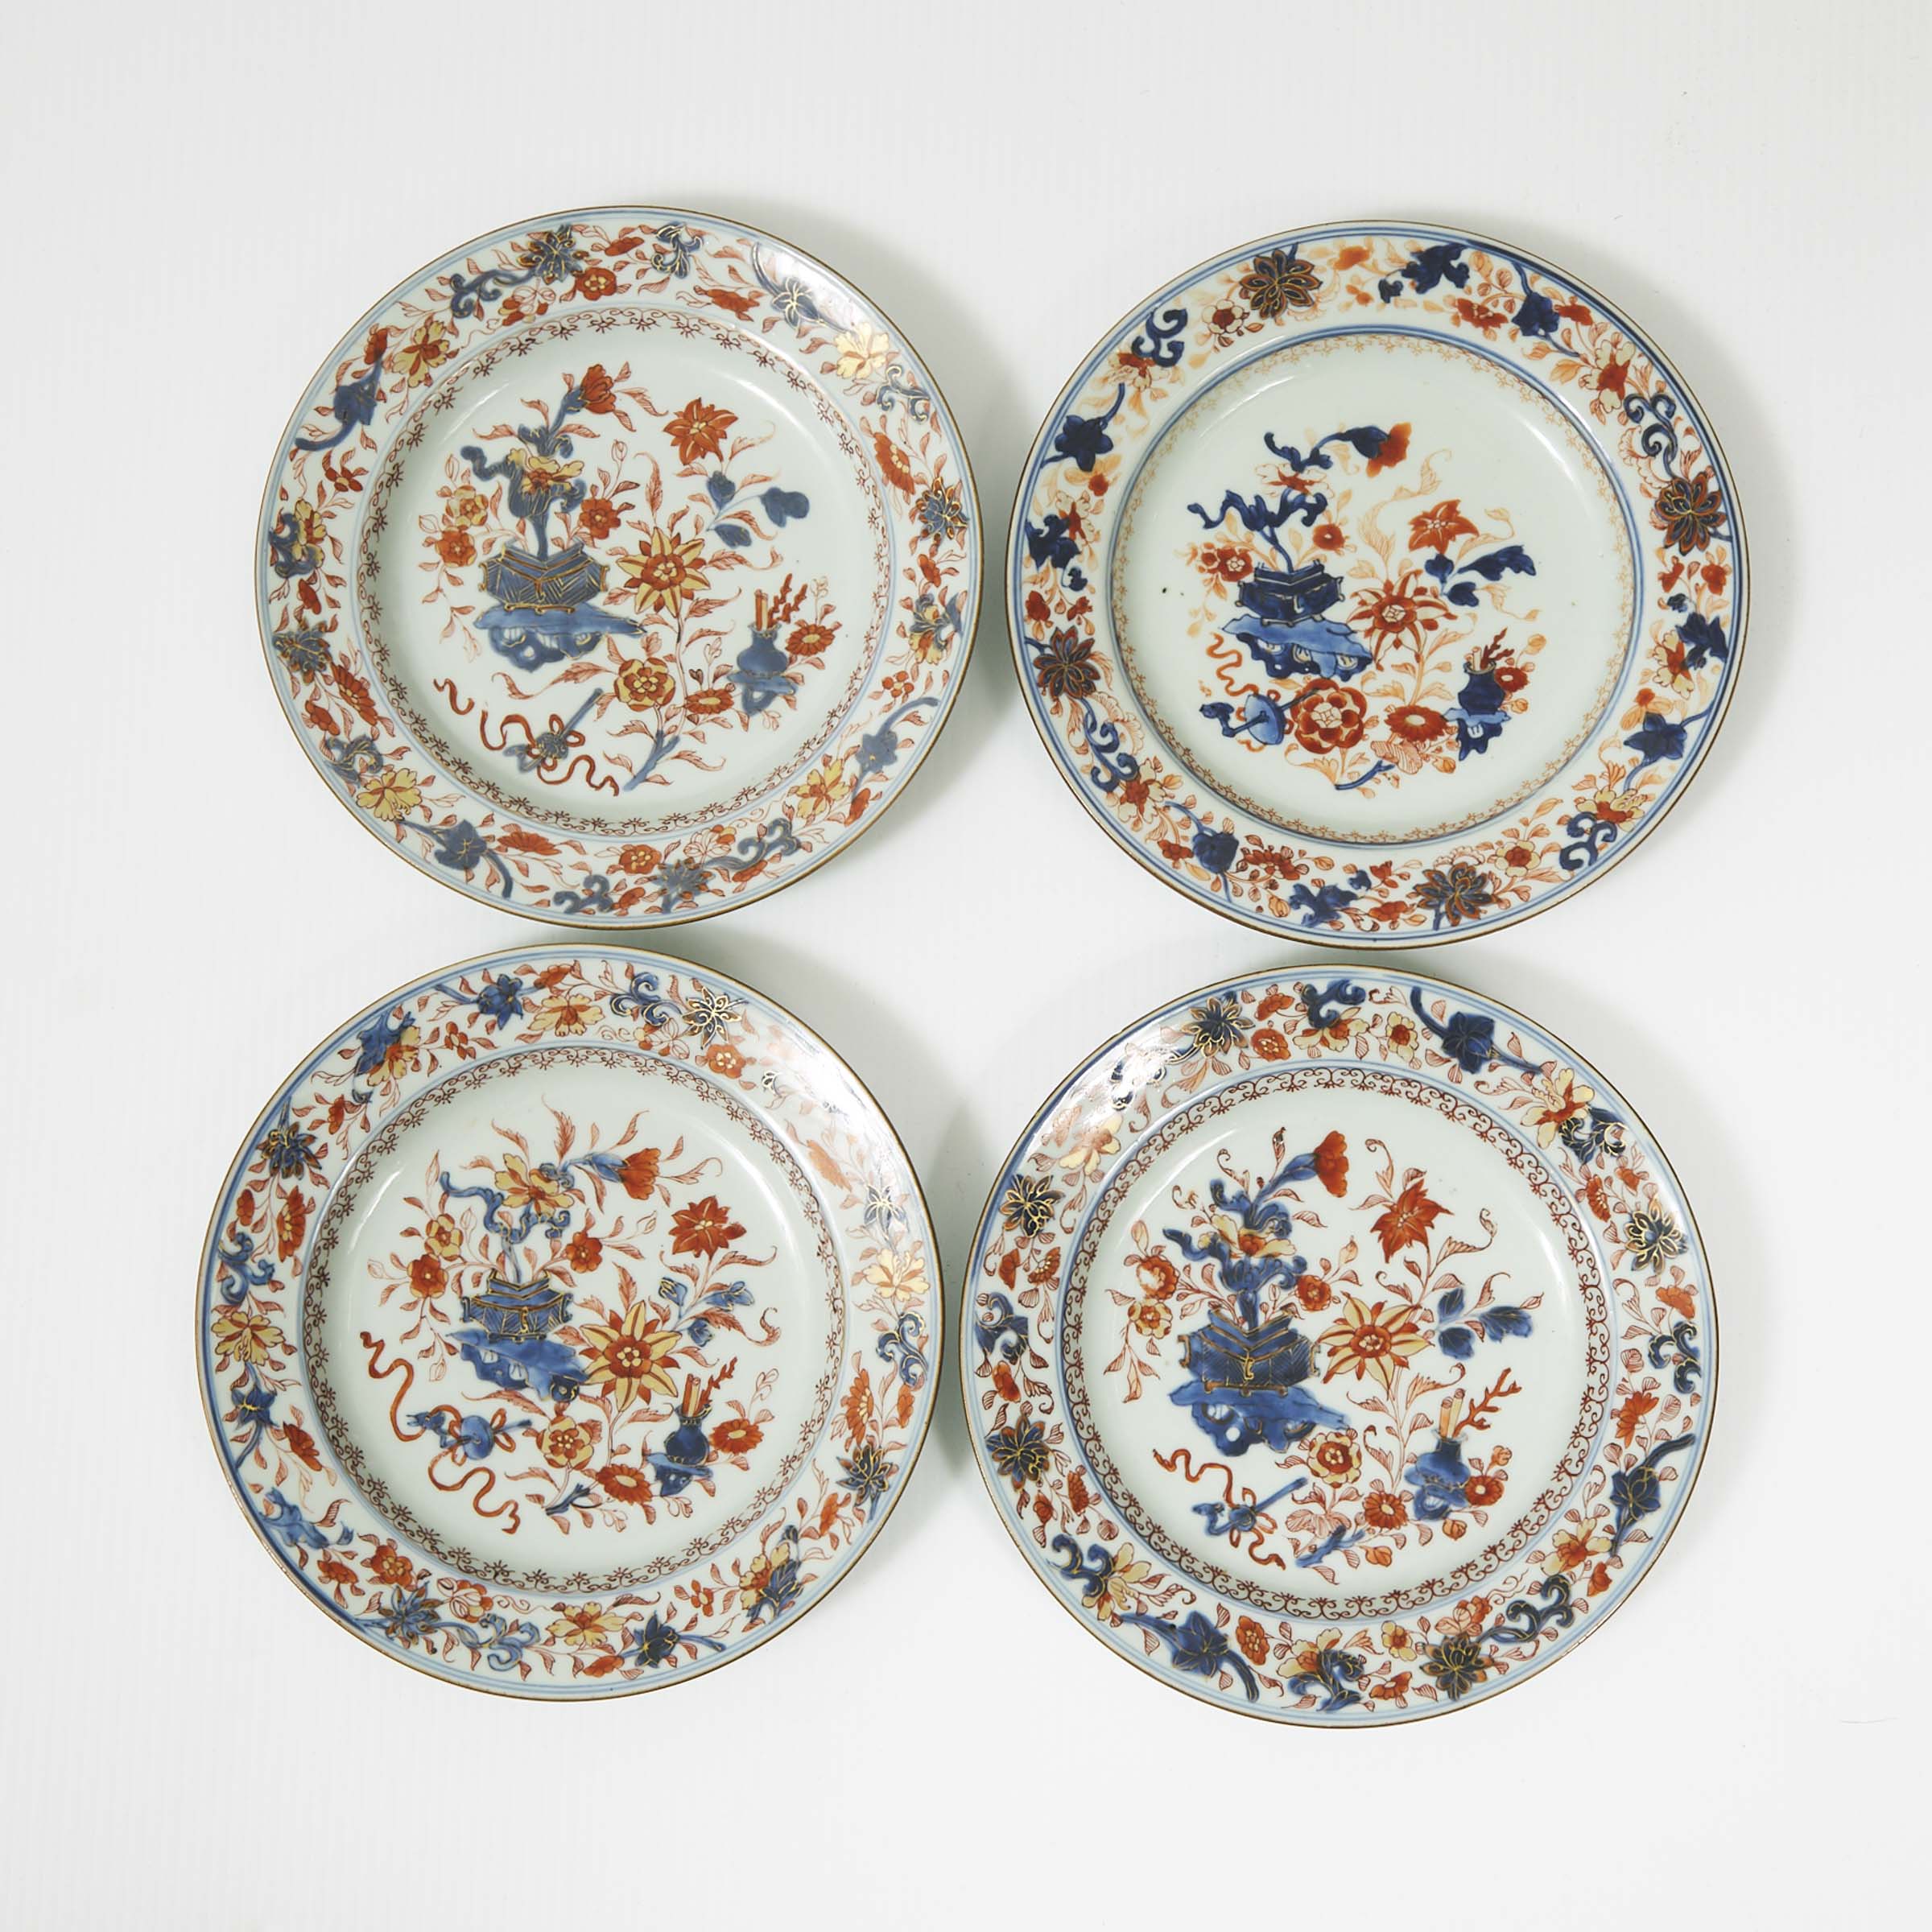 A Set of Four Chinese Imari Plates, Kangxi Period, 17th/18th Century